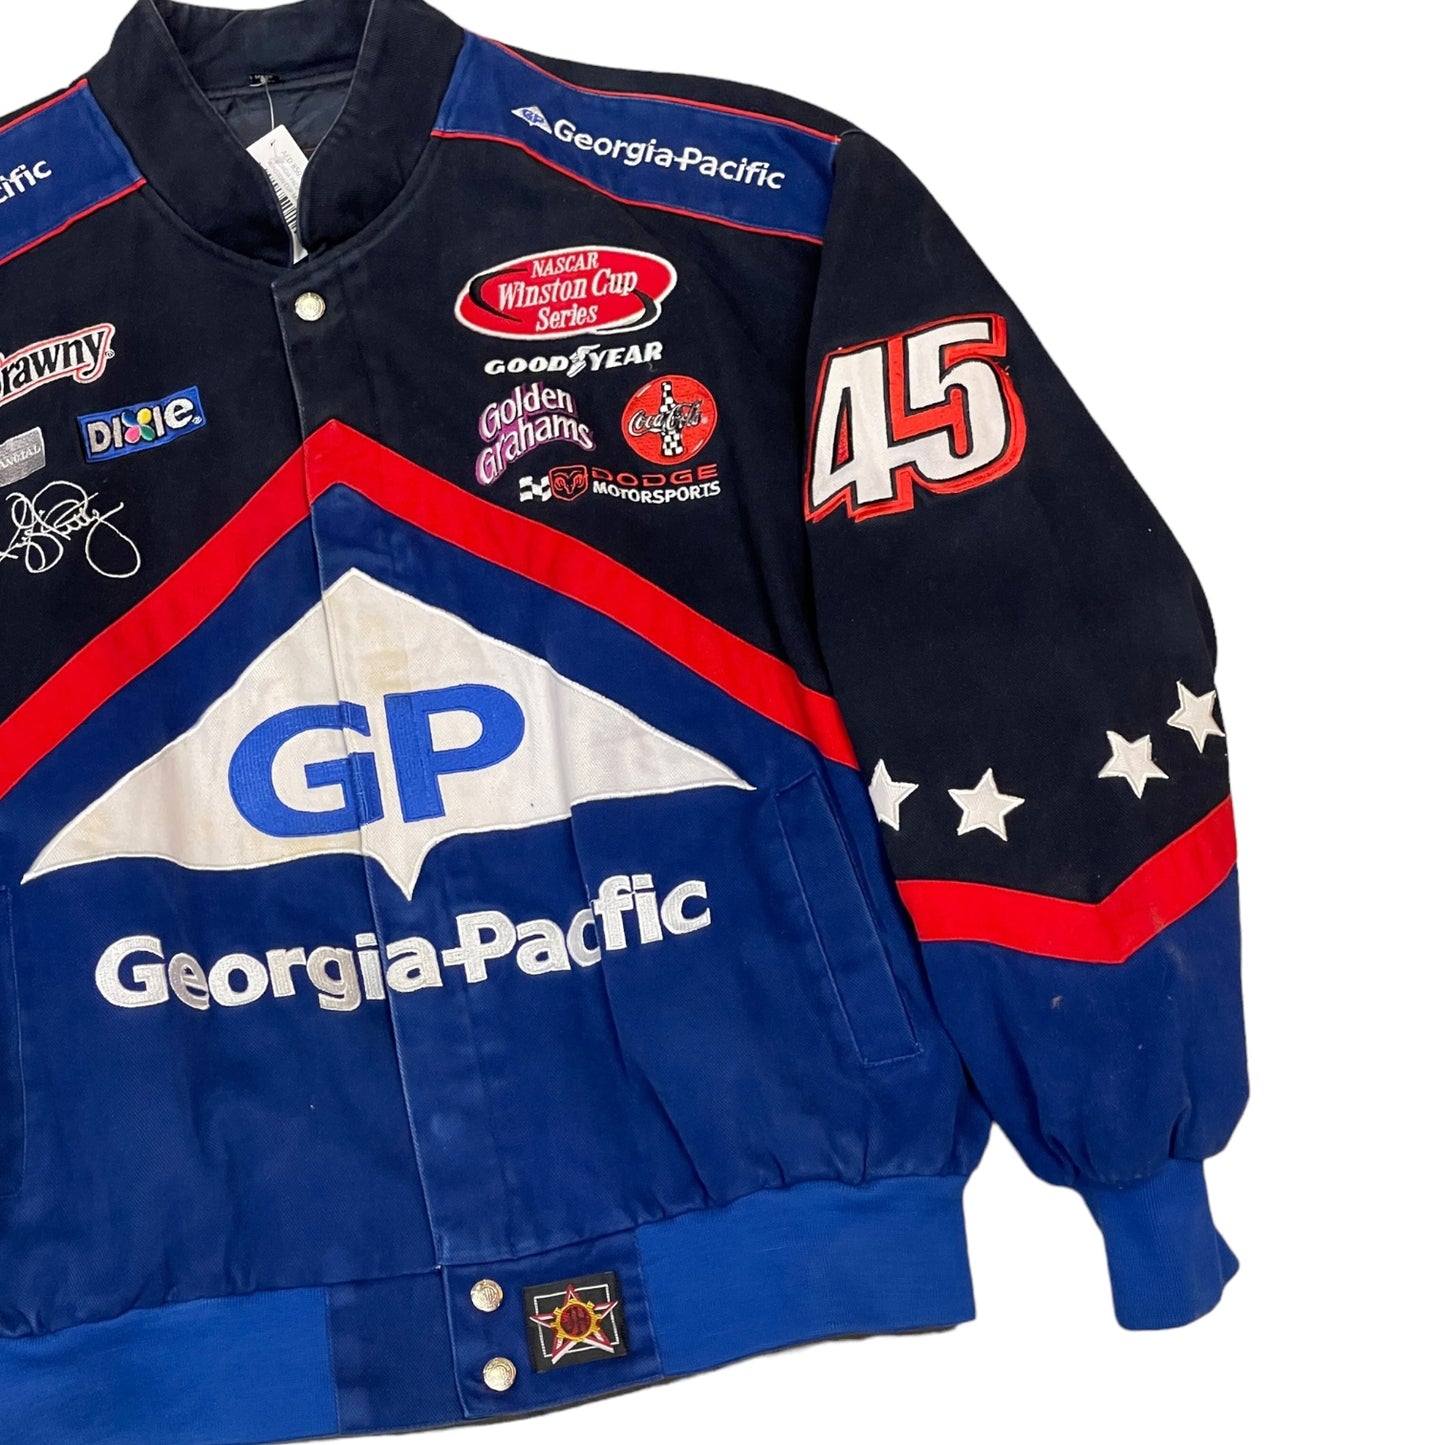 Georgia - Pacific Nascar Jacket